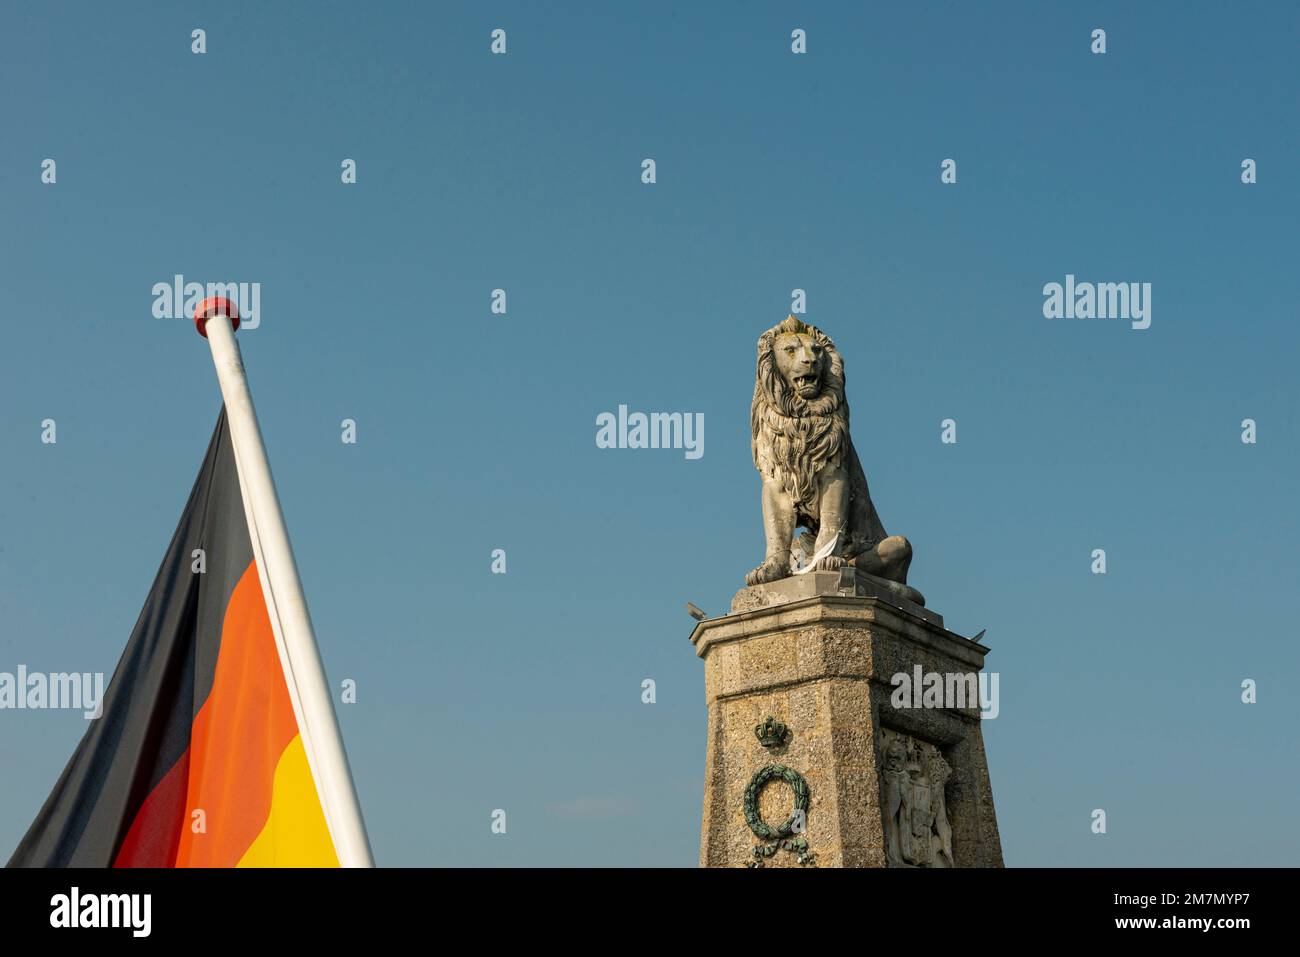 Lake Constance, Lindau, harbor entrance, lion, flag, Germany Stock Photo